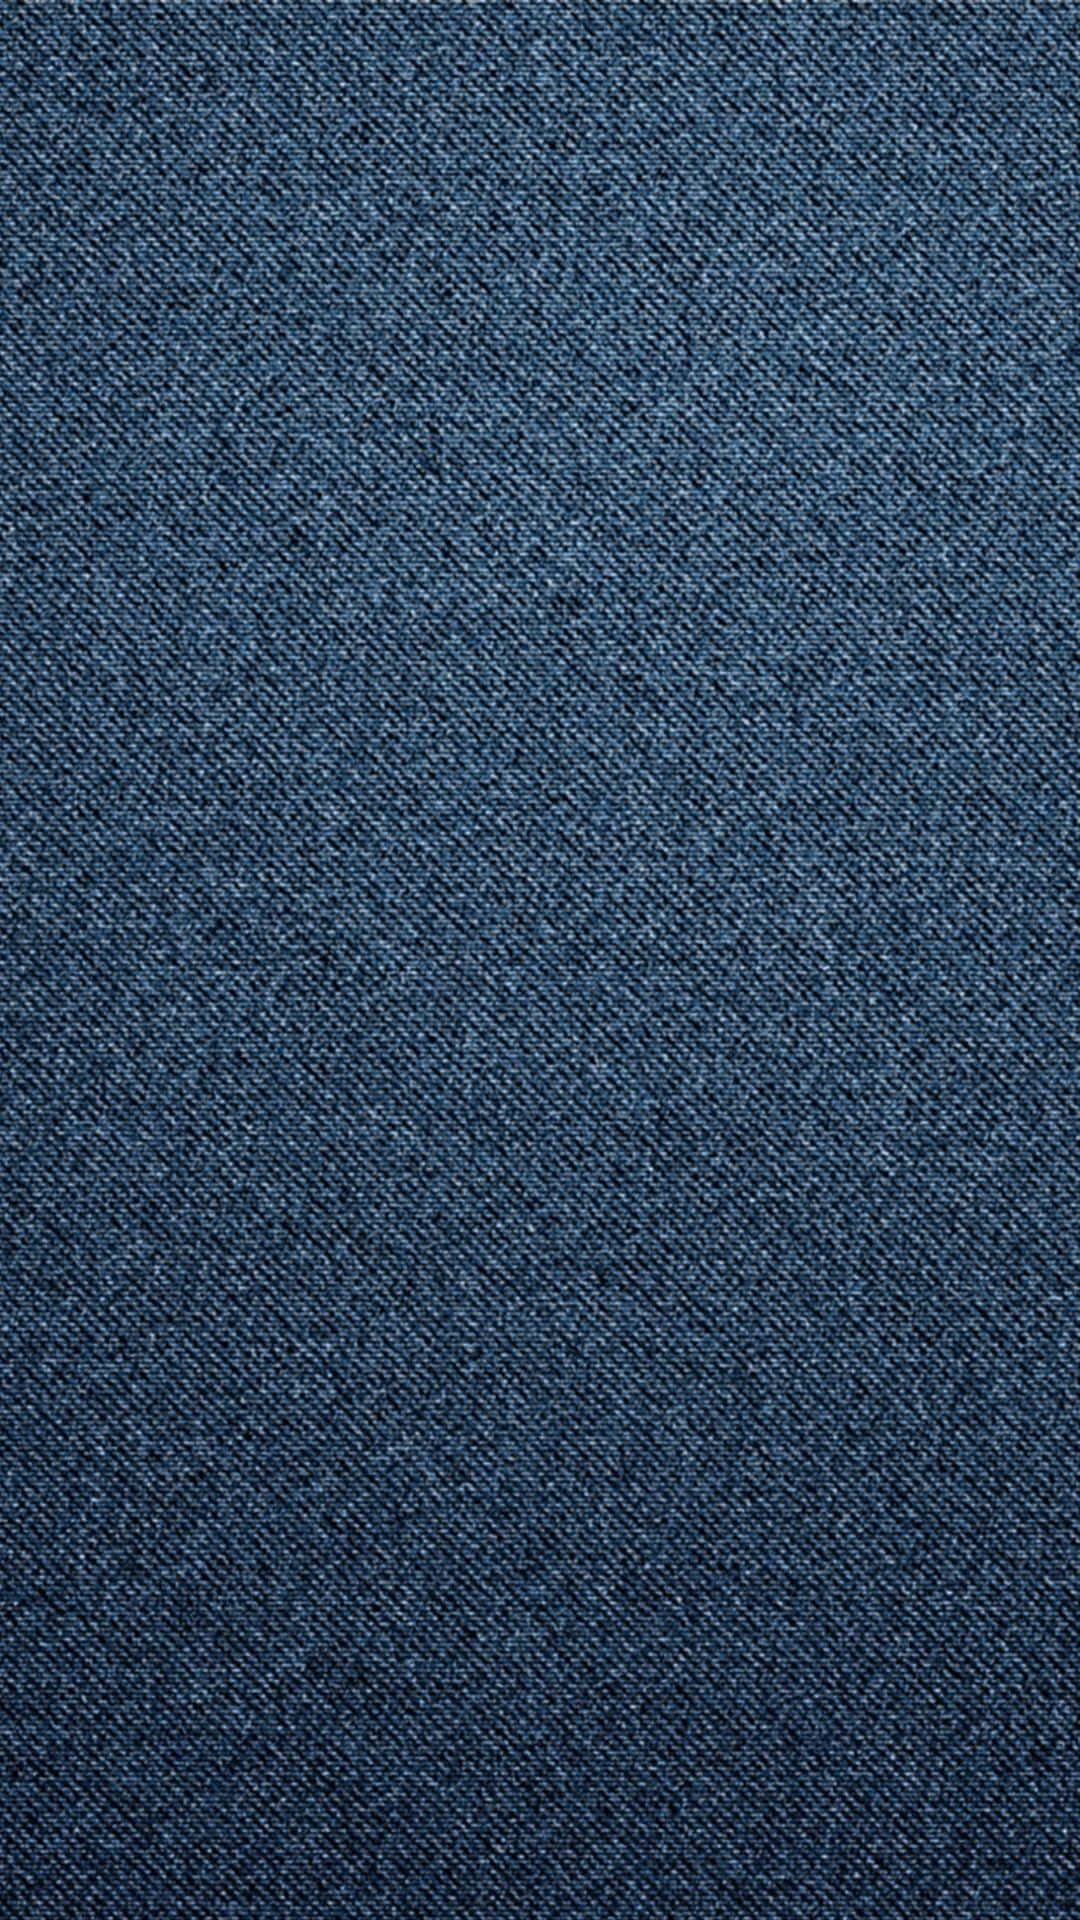 Striped Textured Vinyl Denim Blue Non Woven Wallpaper | Thibaut Woolston